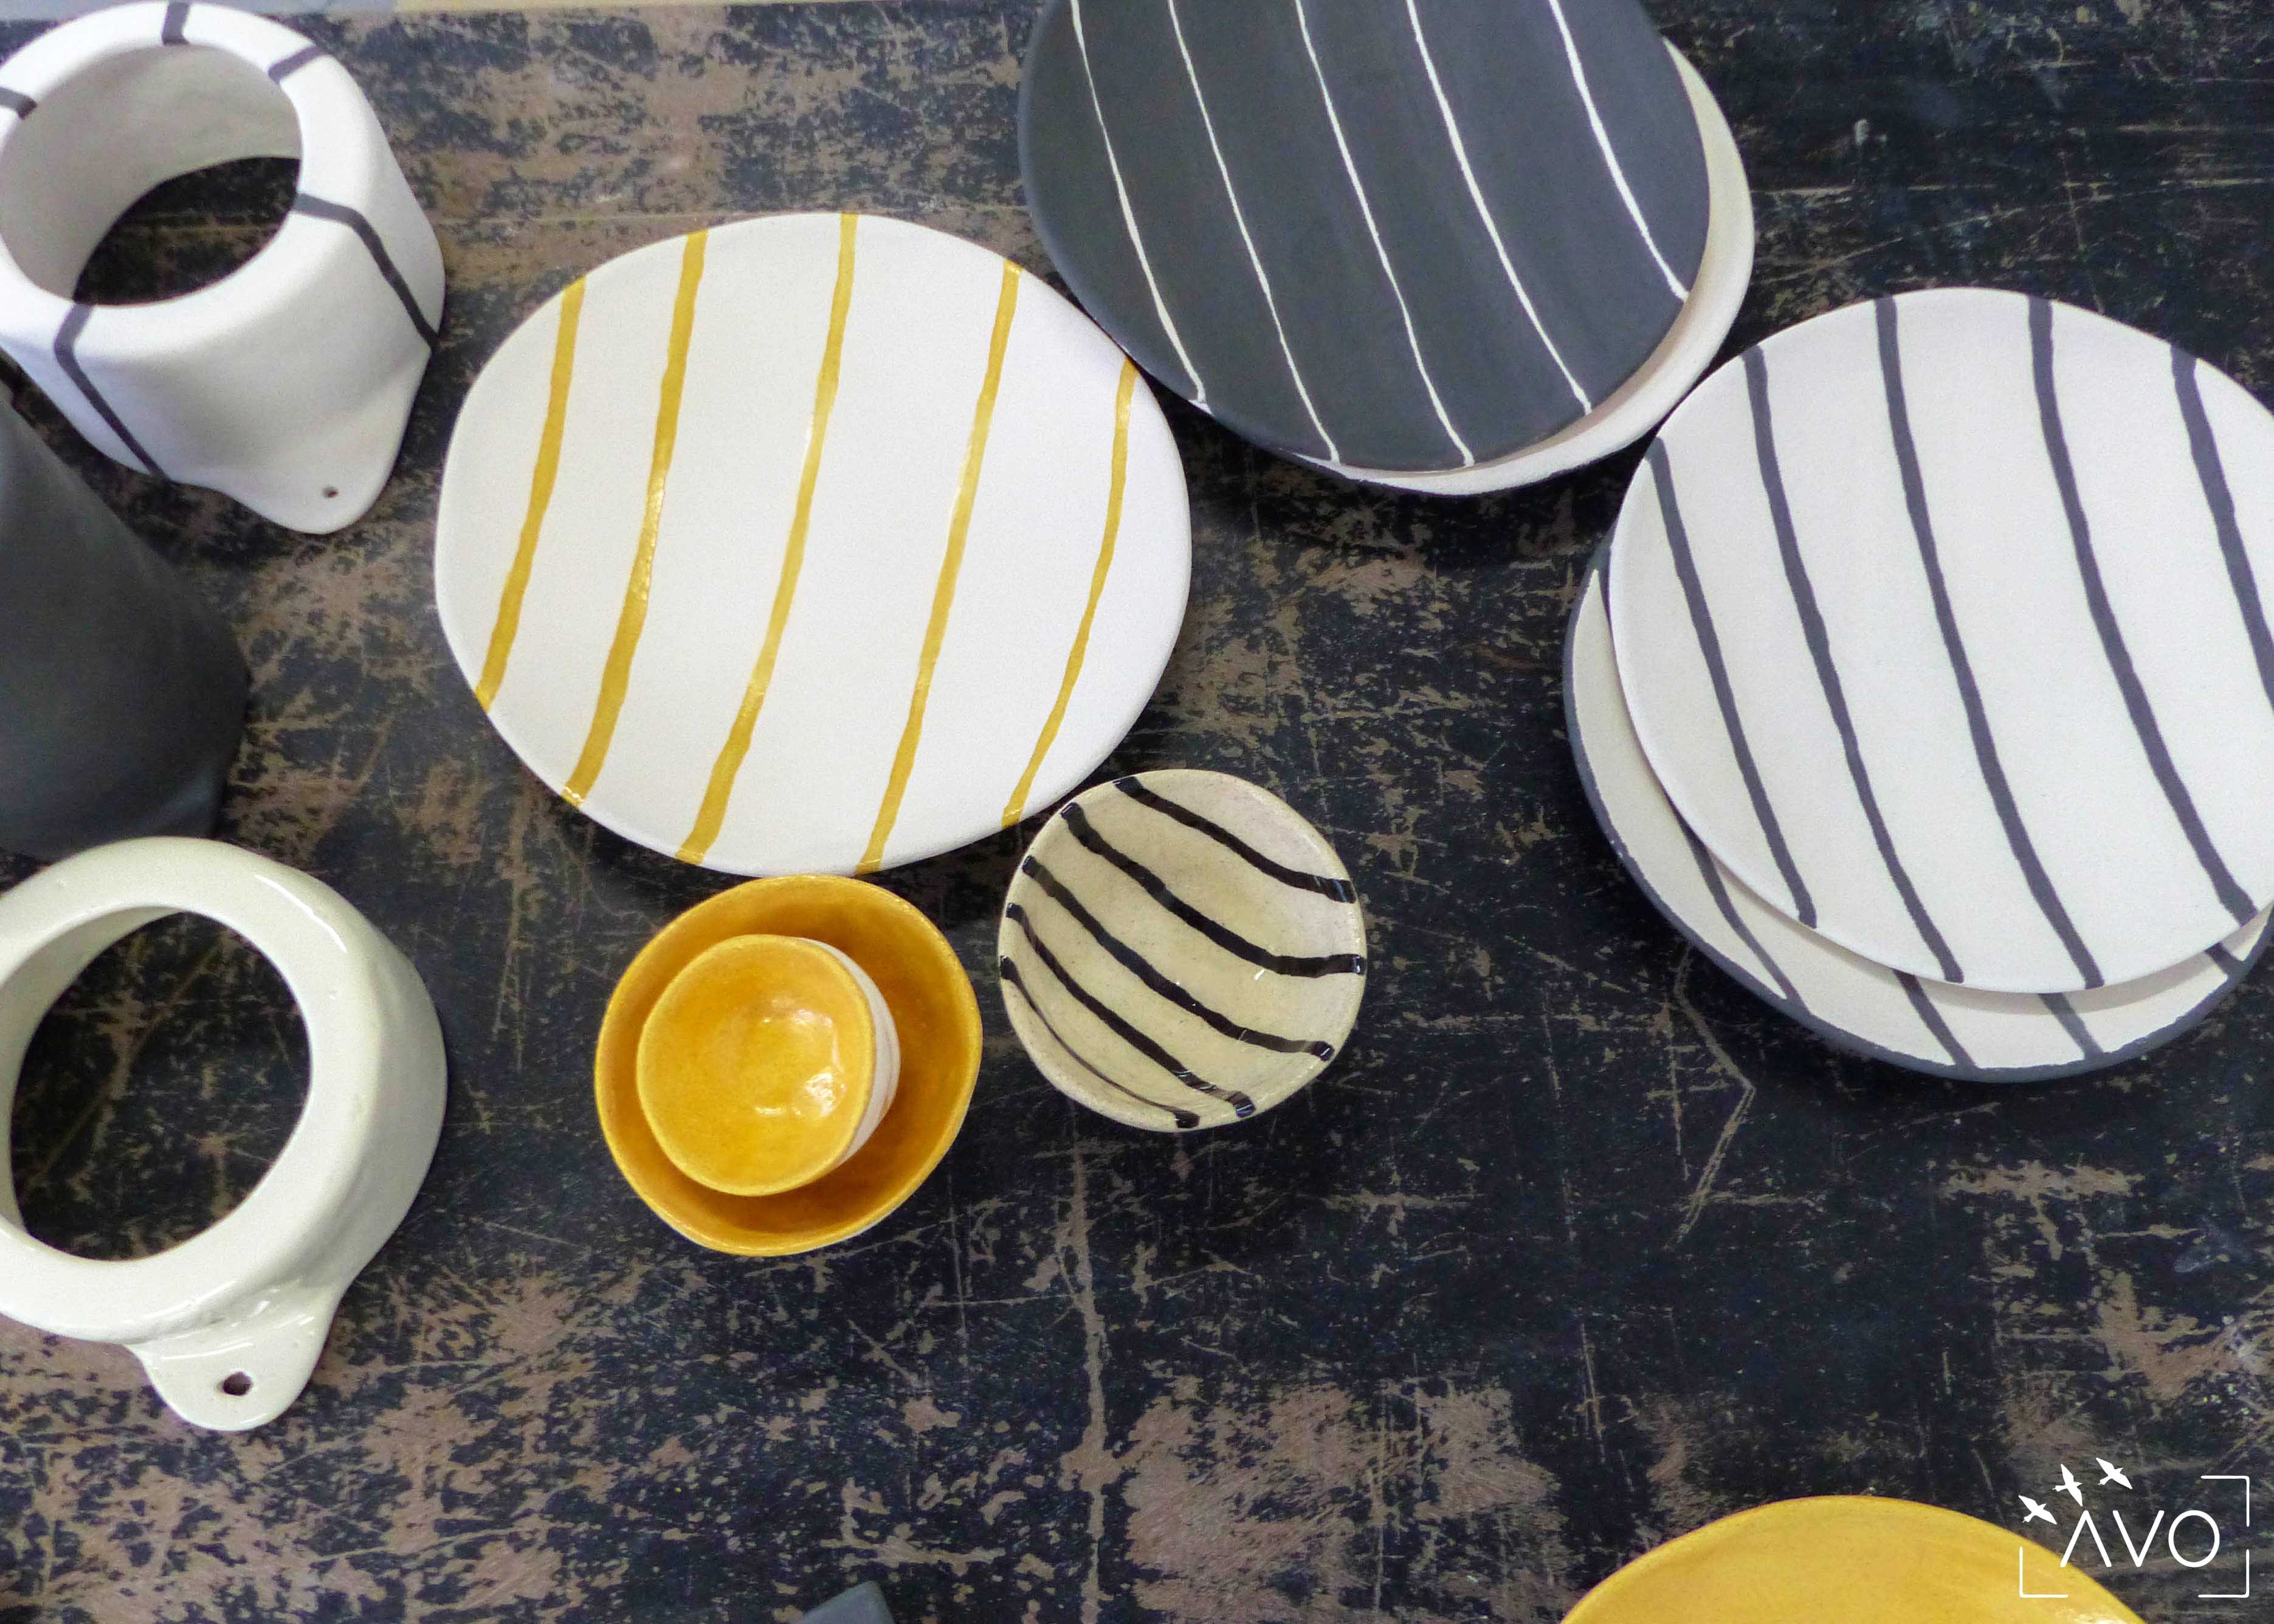 savoir-faire-ceramique-faience-decoration-bol-plat-creatrice-colore-email-terre-local-sabine-orlandini-atelier-rayures